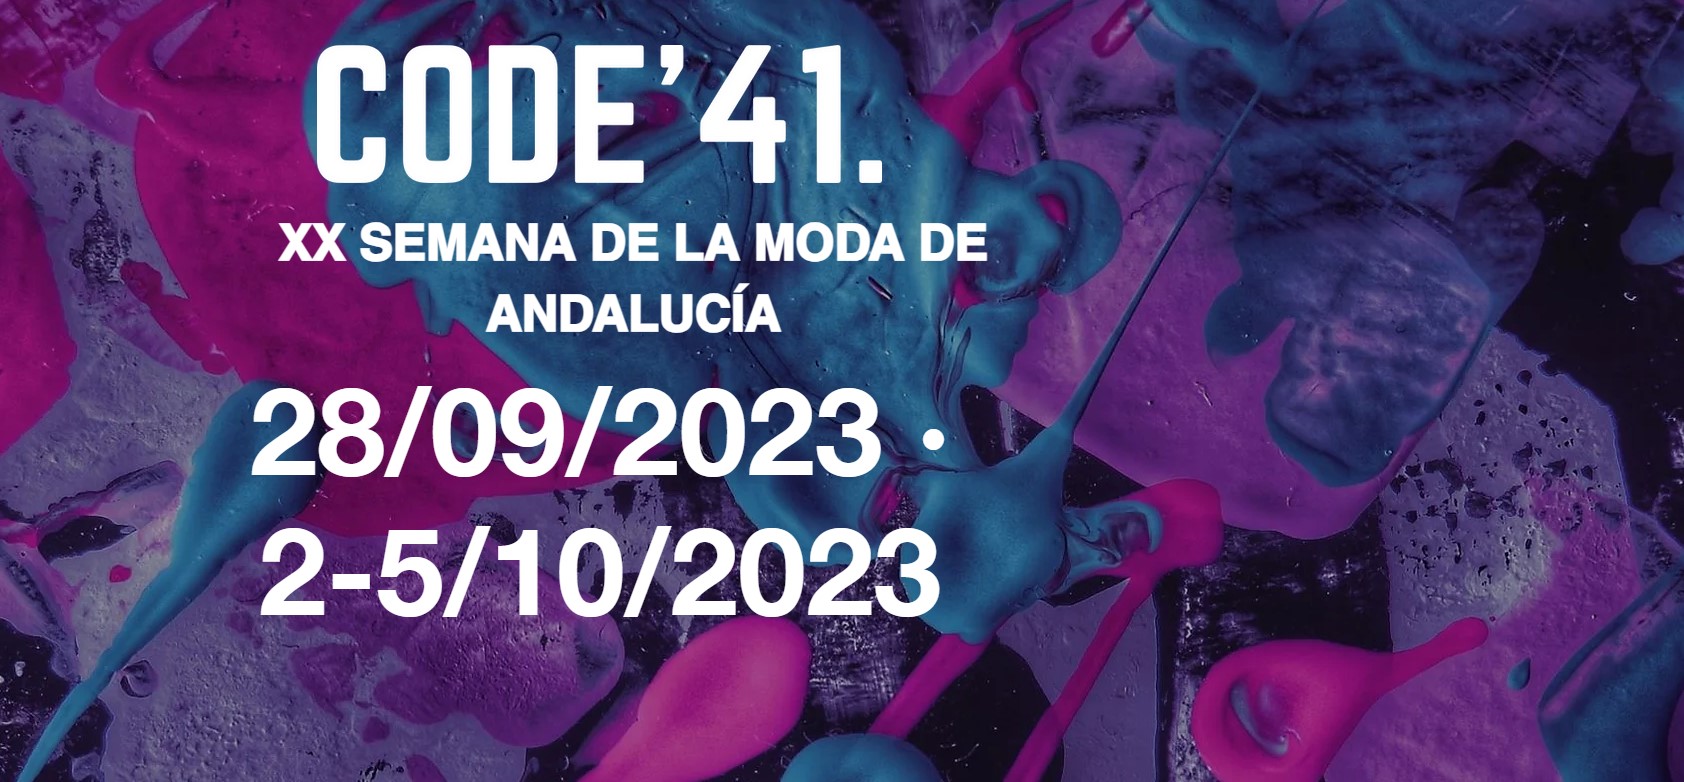 Semana de la moda de Andalucía